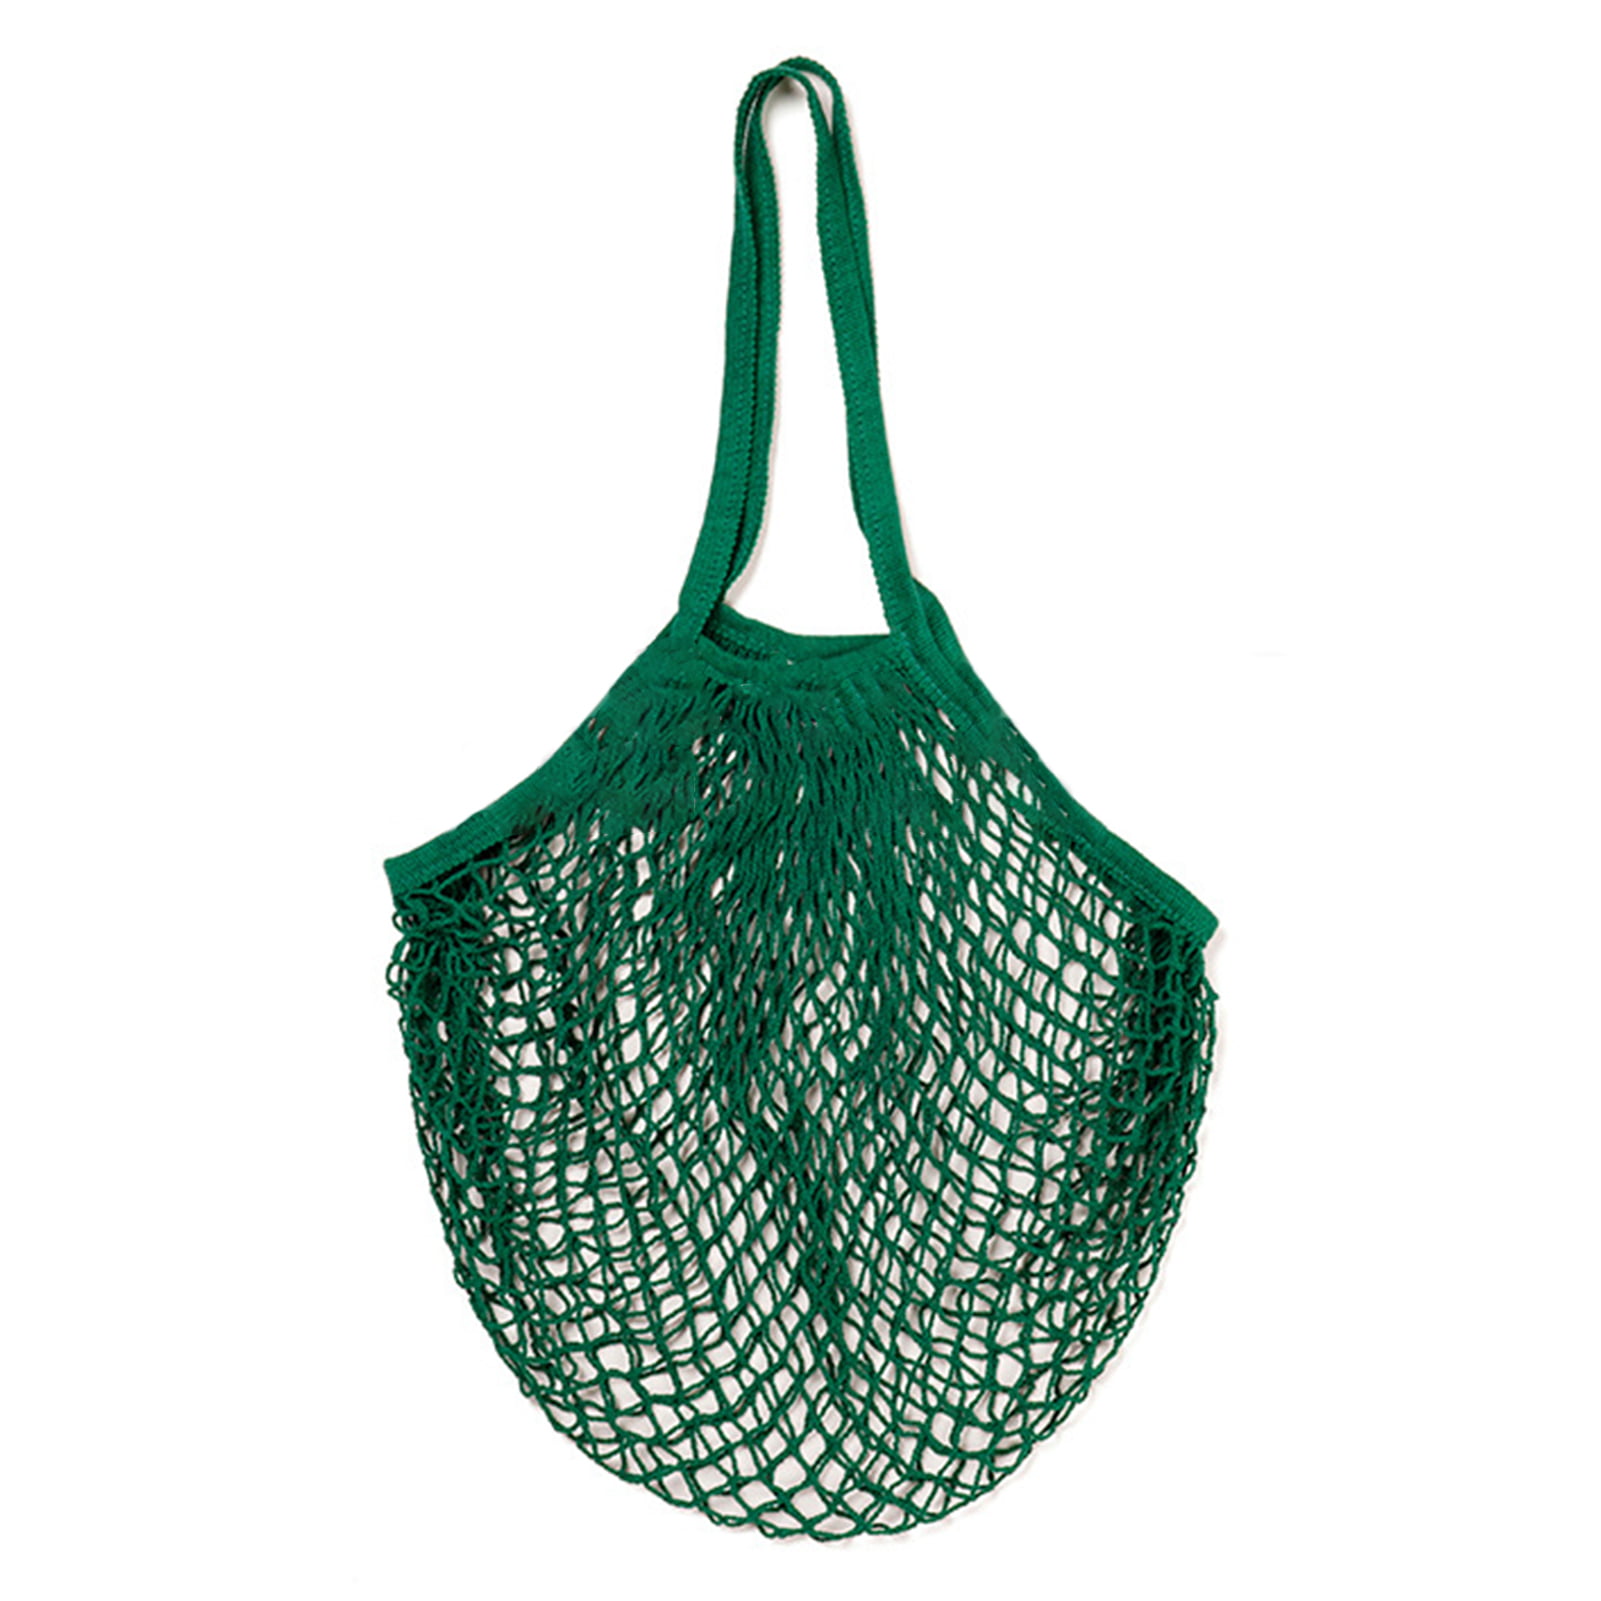 Details about   Portable Reusable Produce Bags Cotton Mesh Bag for Fruit Vegetable Grocery Bags 